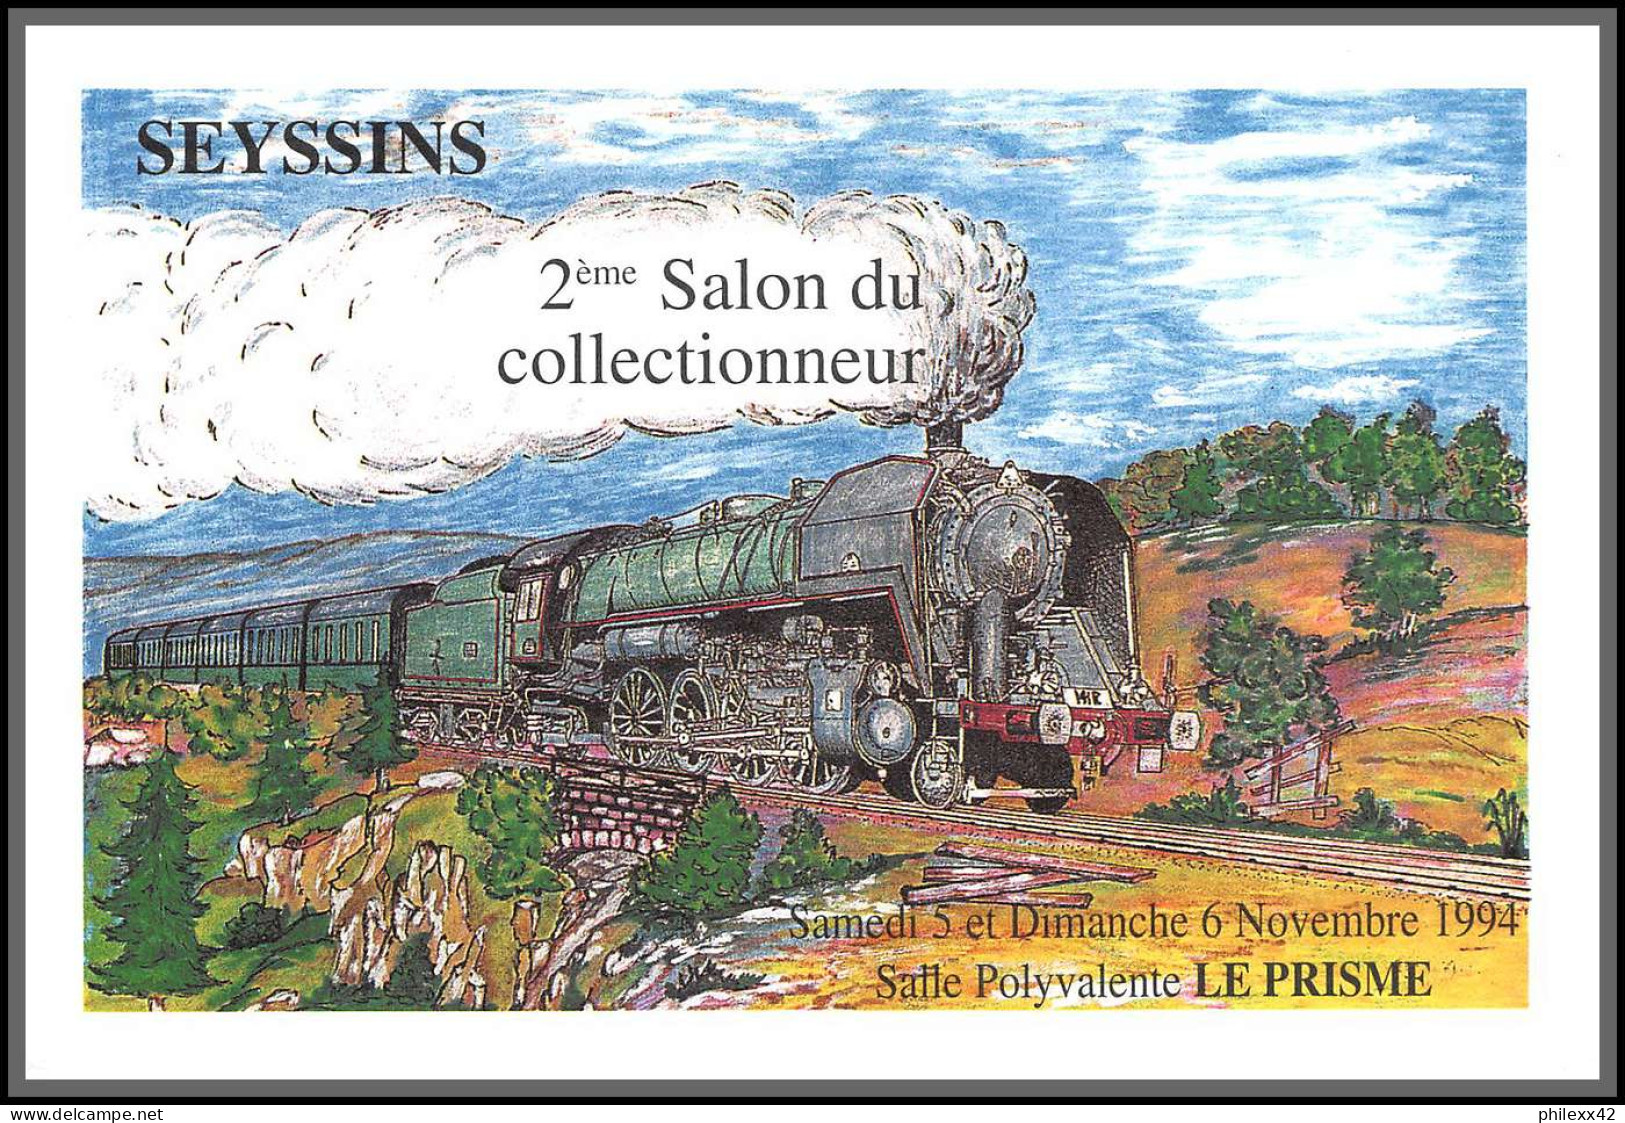 74241 Mixte Atm Briat 4/3/1997 M'tsangamouji Mayotte Echirolles Isère France Carte Postcard Colonies - Storia Postale